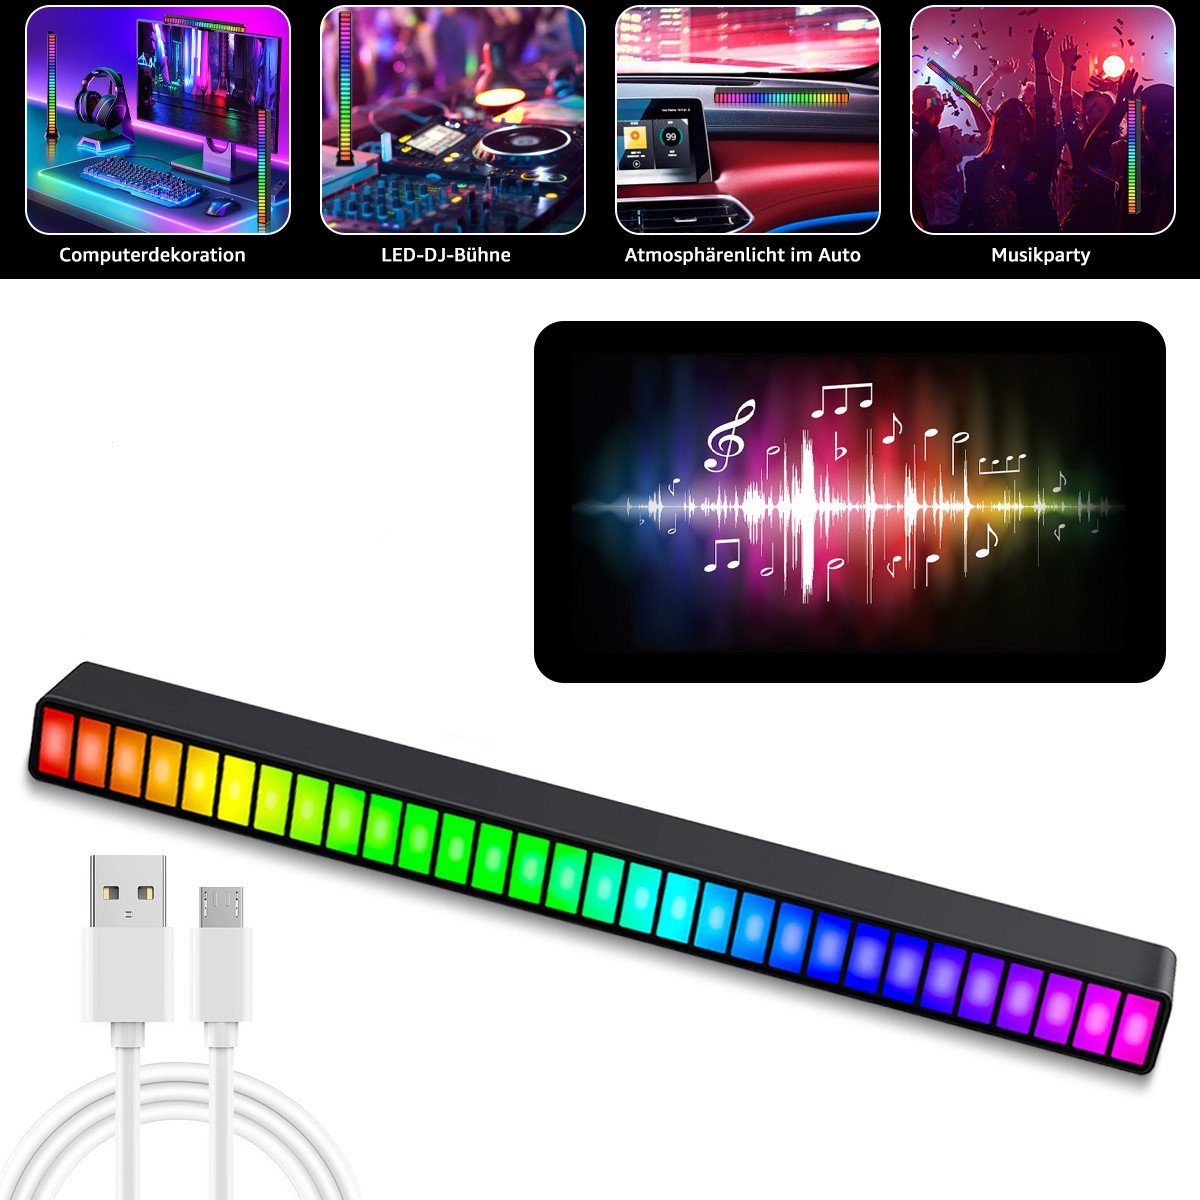 LED LED LED 32-flammig, Lamp, Lichtleiste, 7Magic Lampe, Stripe USB Weihnachten Umgebungslichter Musik Rhythmus RGB